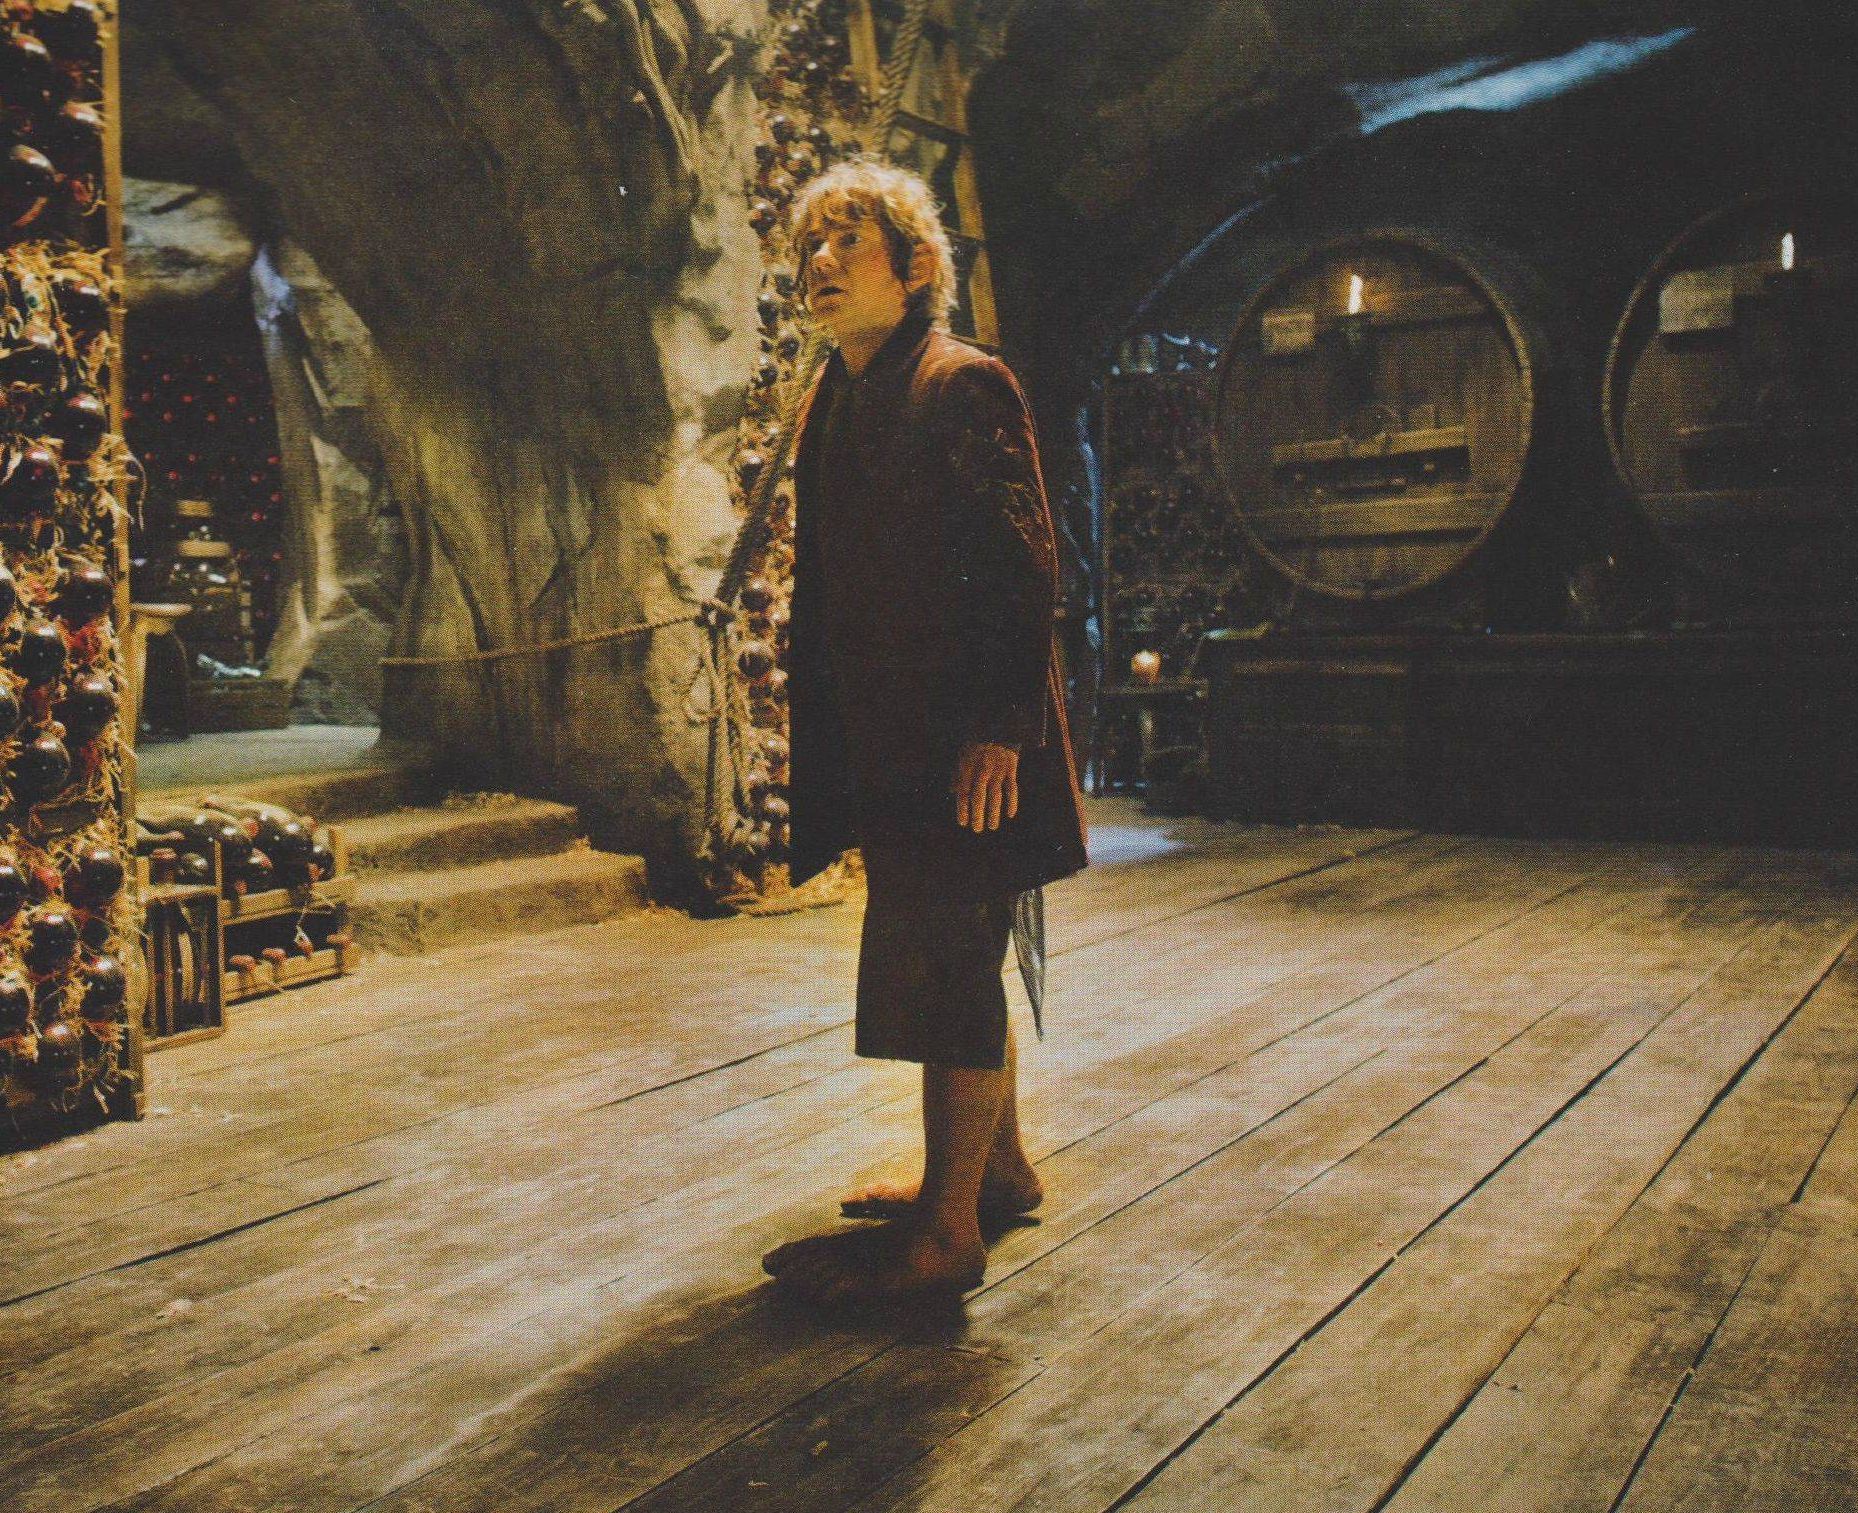 The Hobbit walking around in somekind of cellar